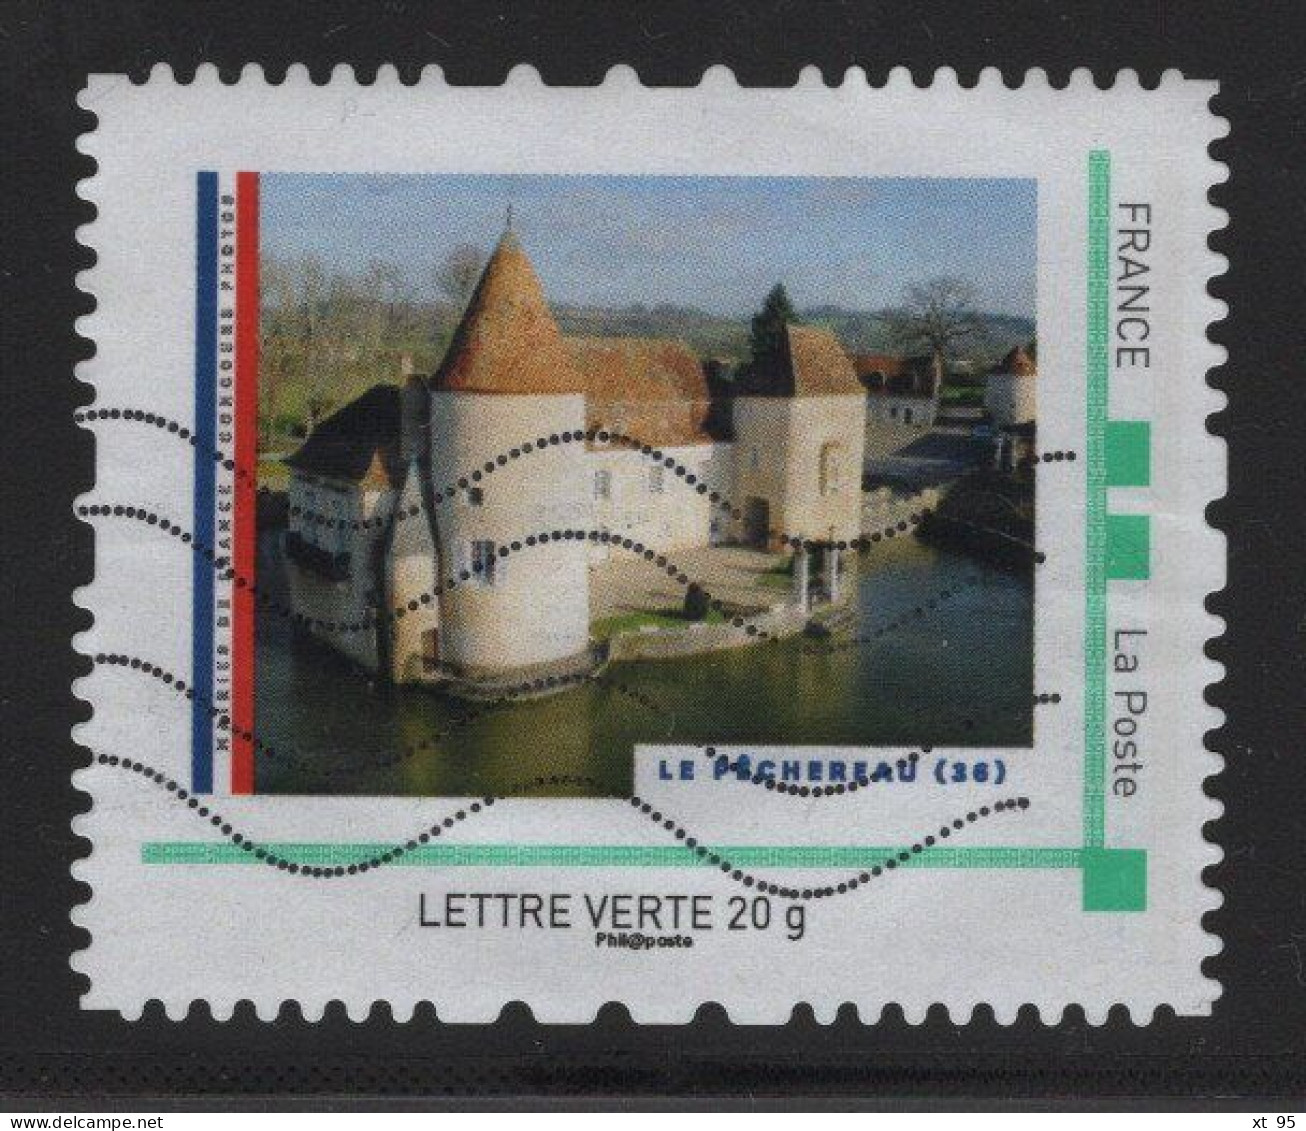 Timbre Personnalise Oblitere - Lettre Verte 20g - Le Pechereau - Used Stamps